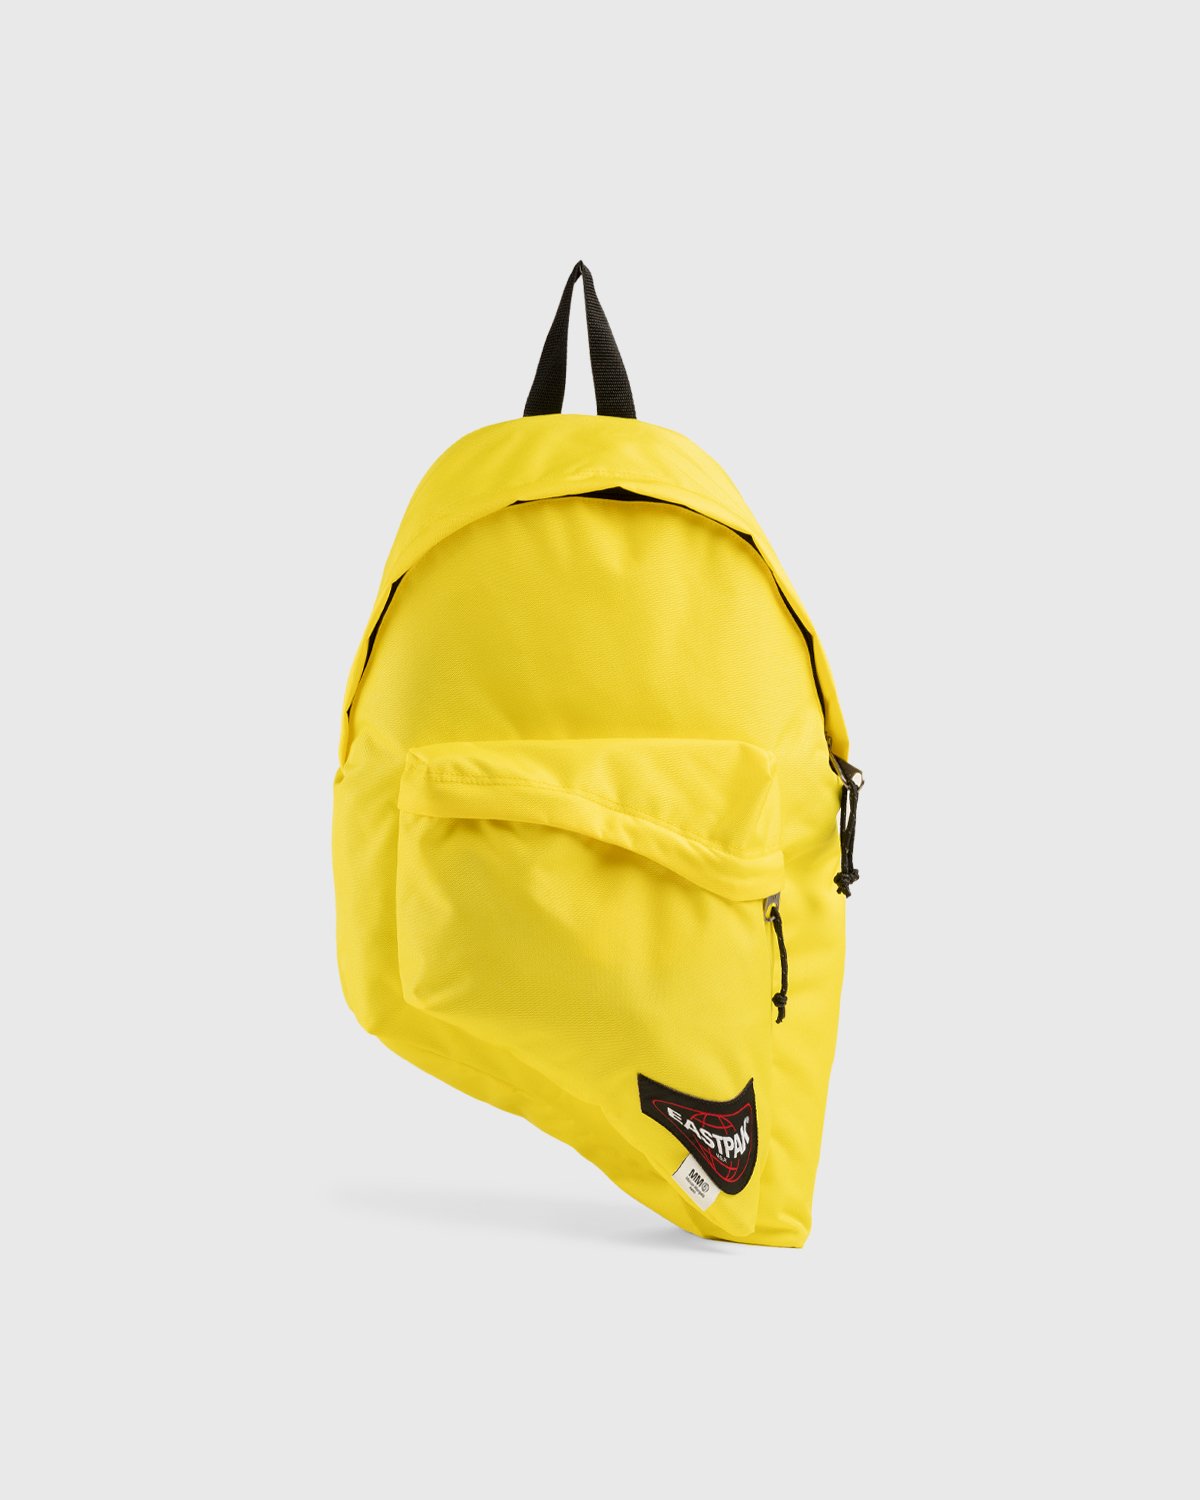 MM6 Maison Margiela x Eastpak - Zaino Backpack Yellow - Accessories - Yellow - Image 1